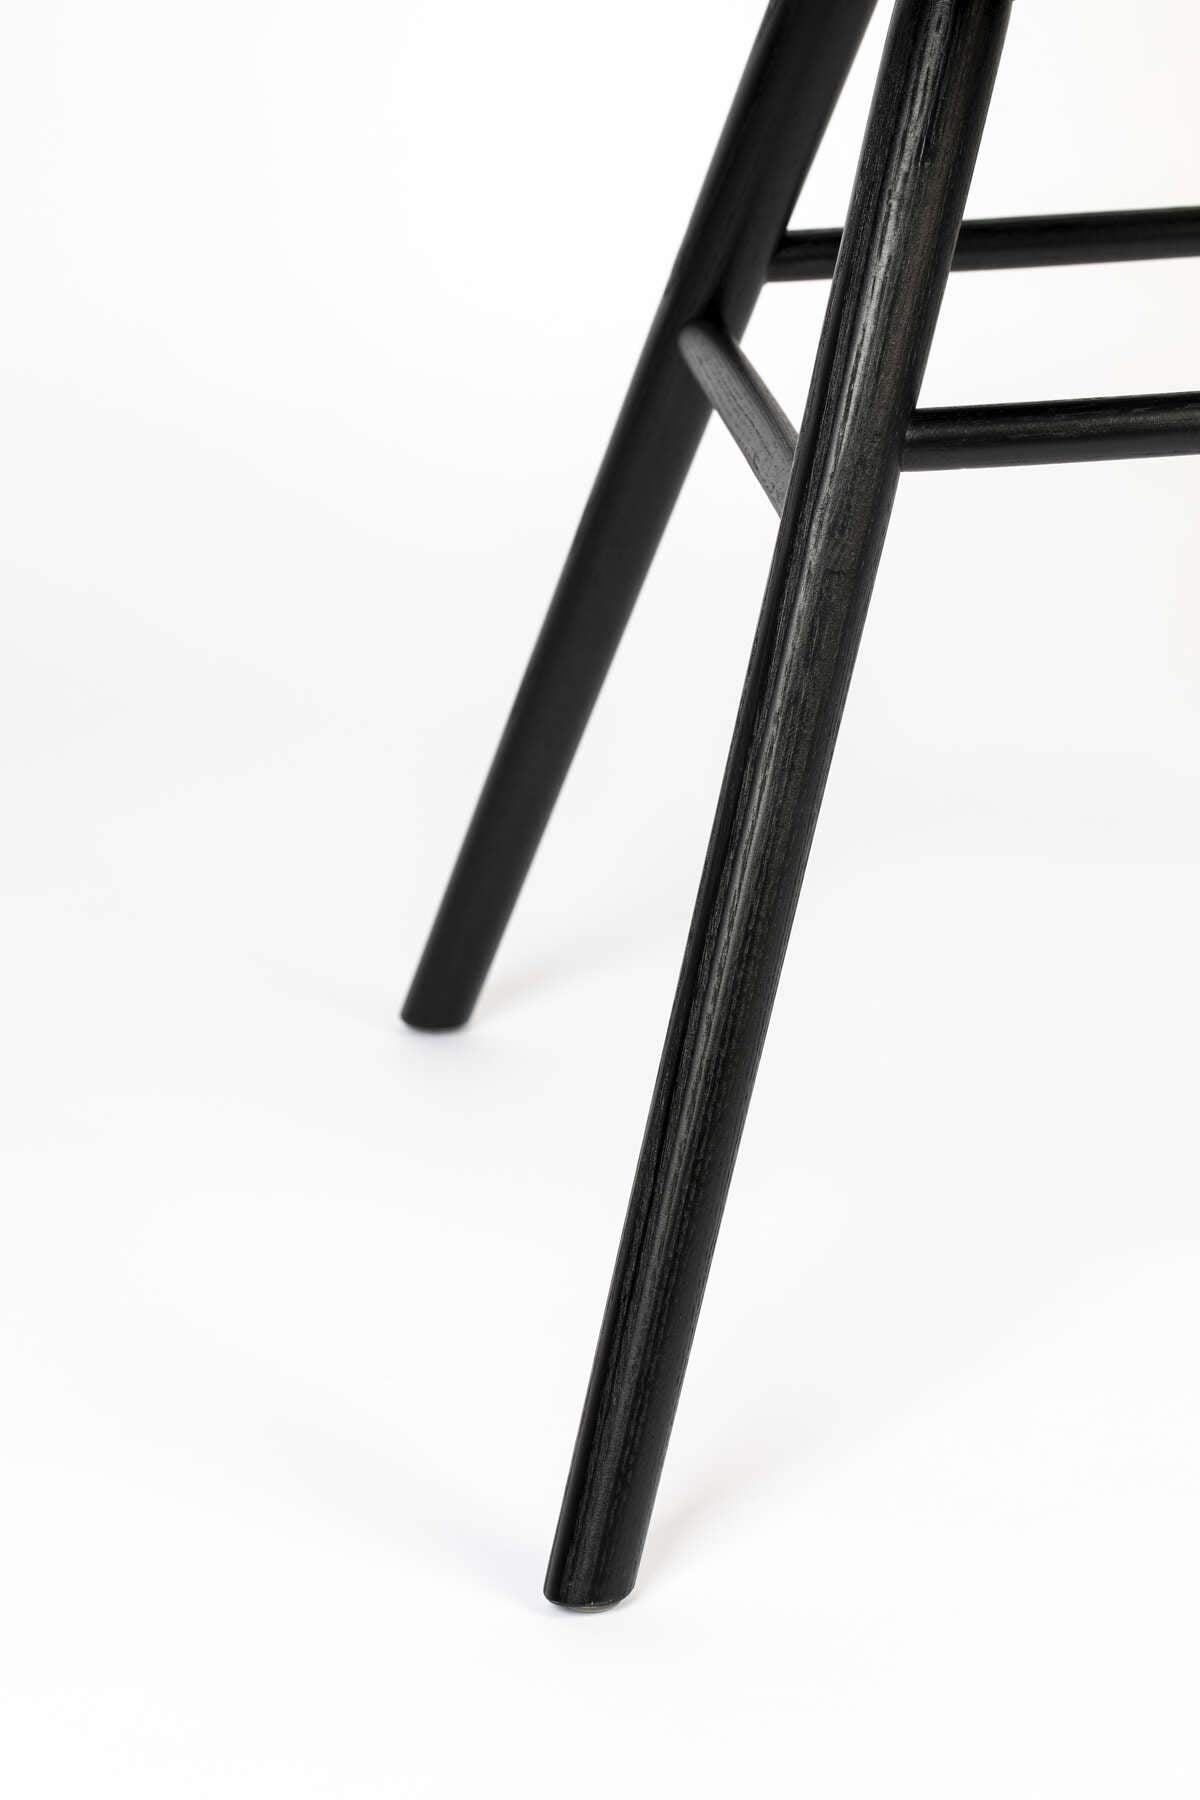 ALBERT KUIP coffee chair, Zuiver, Eye on Design